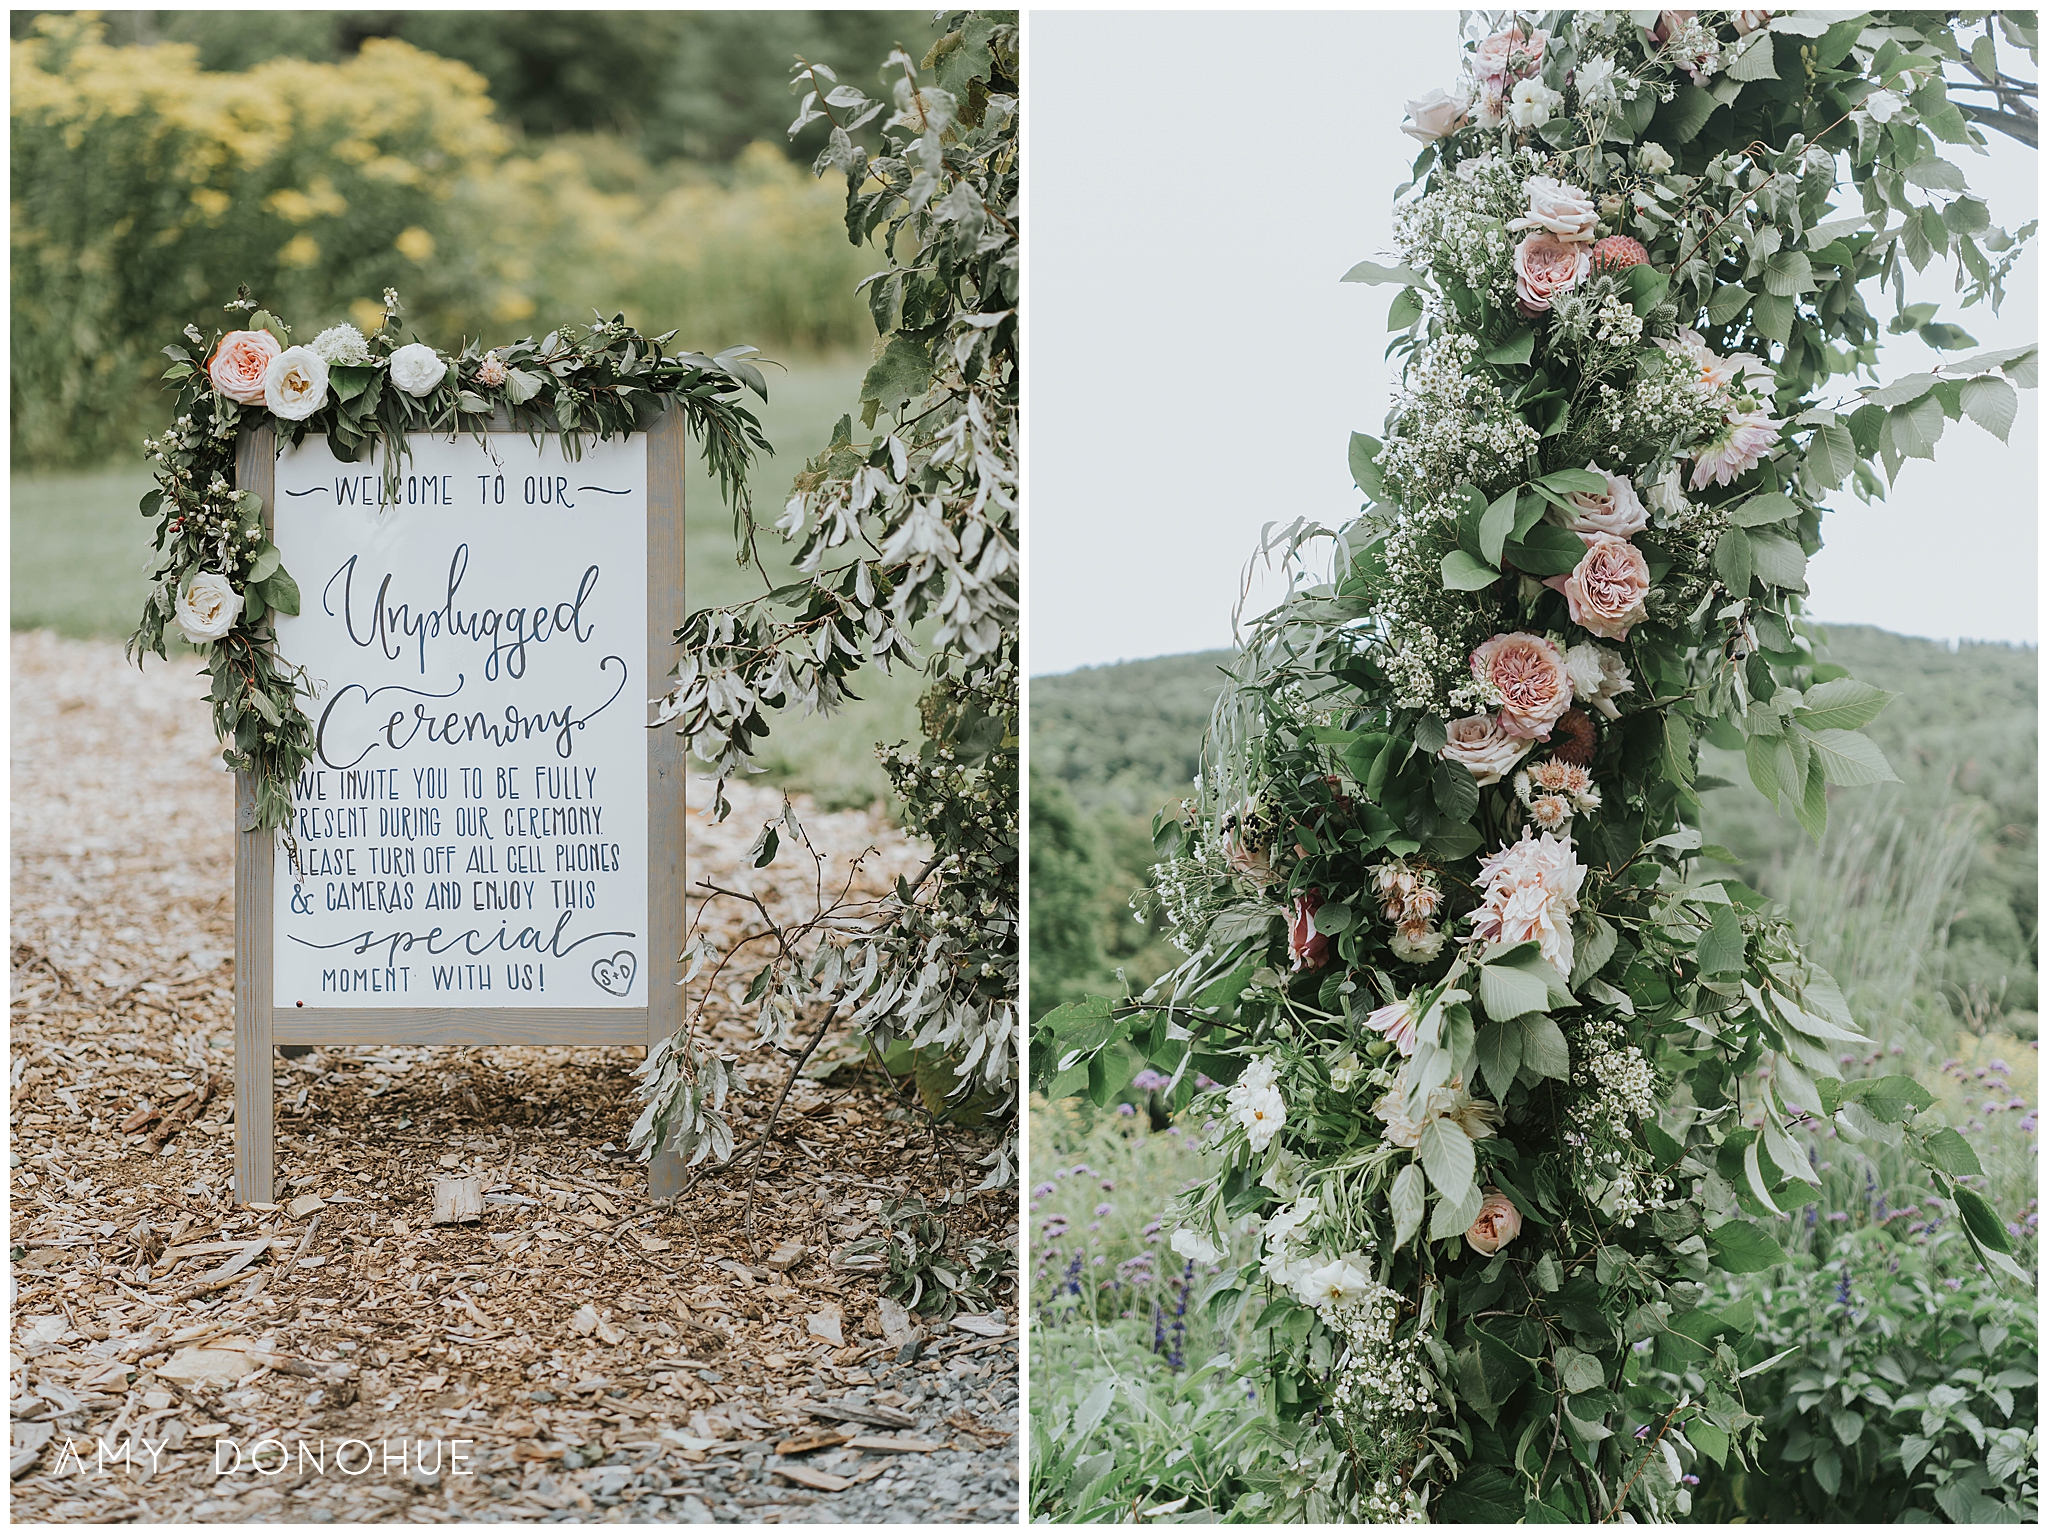 Kelly Way Garden Ceremony | Woodstock Inn & Resort | Vermont Wedding Photographer | © Amy Donohue Photography